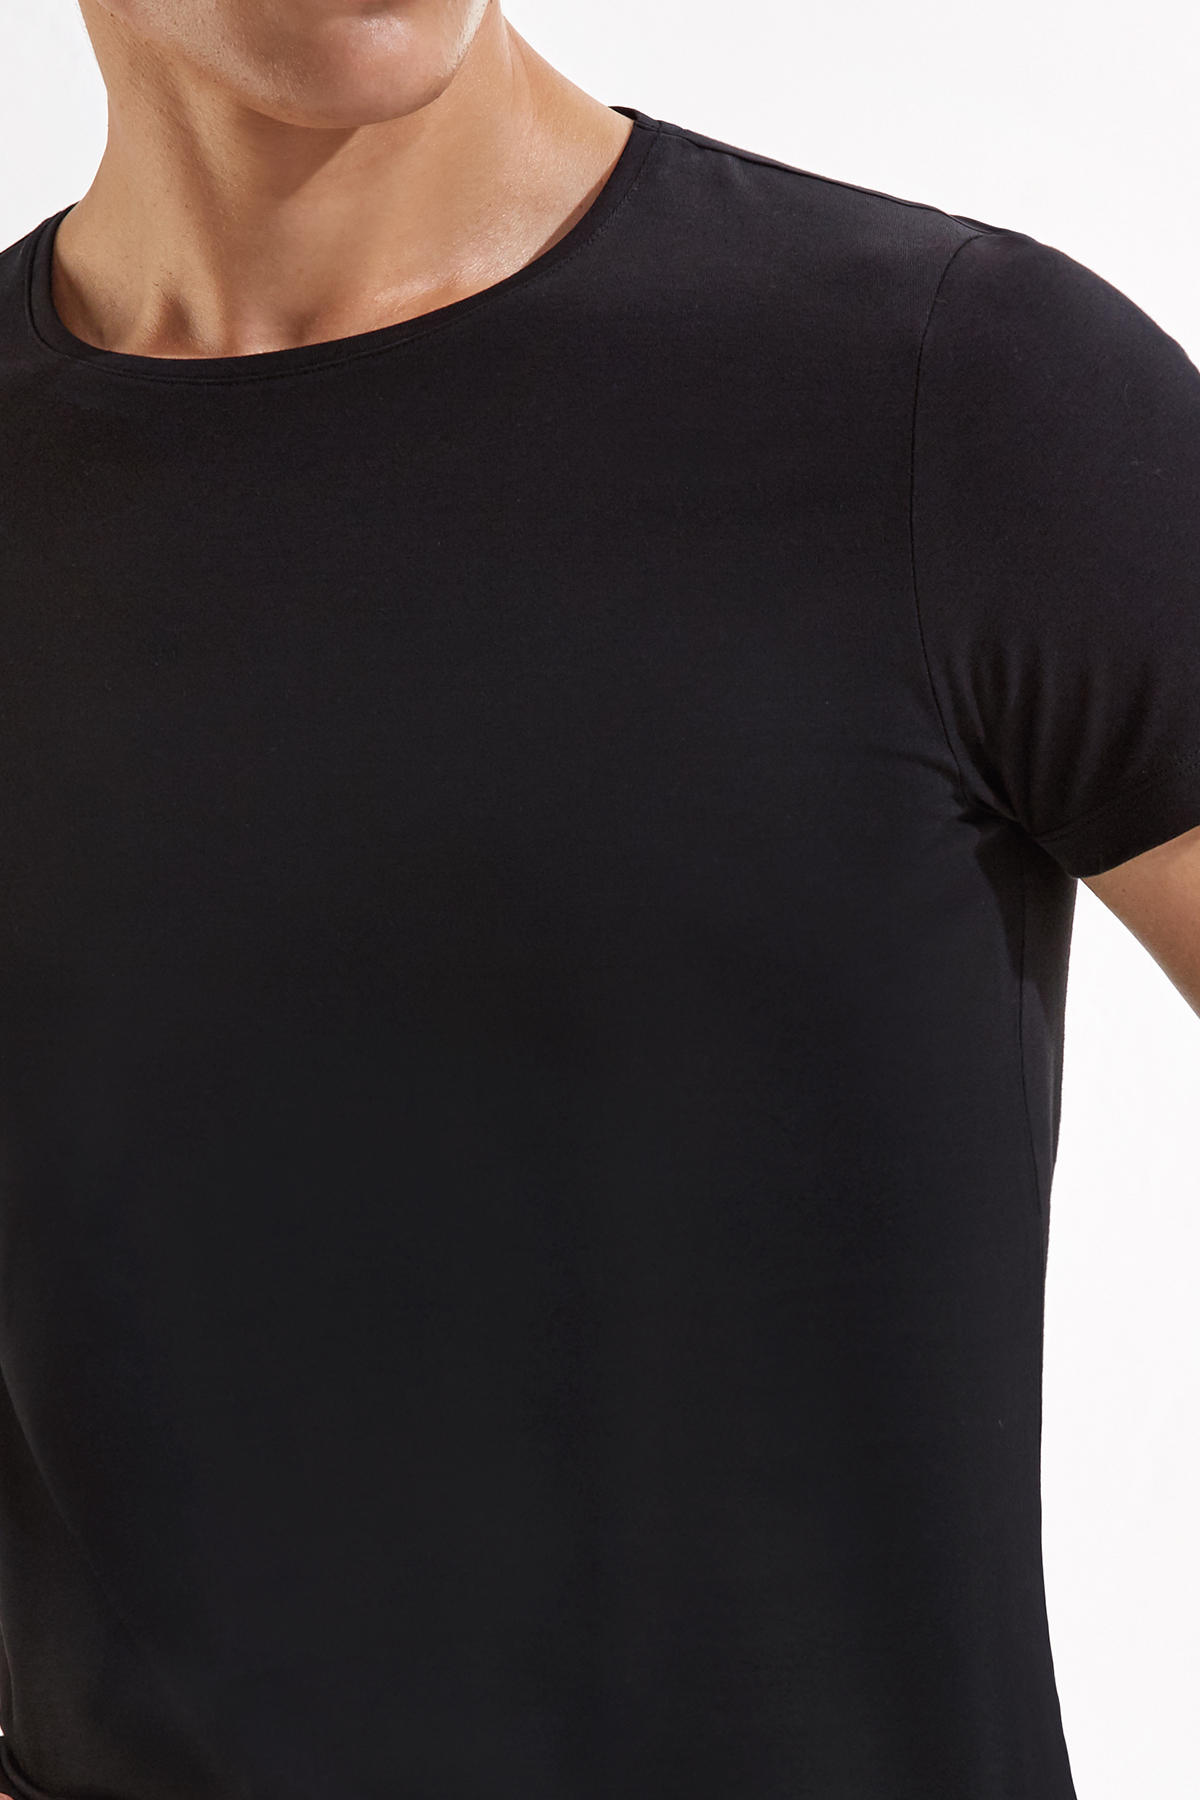 Siyah-Beyaz İkili İç Giyim T-Shirt Seti